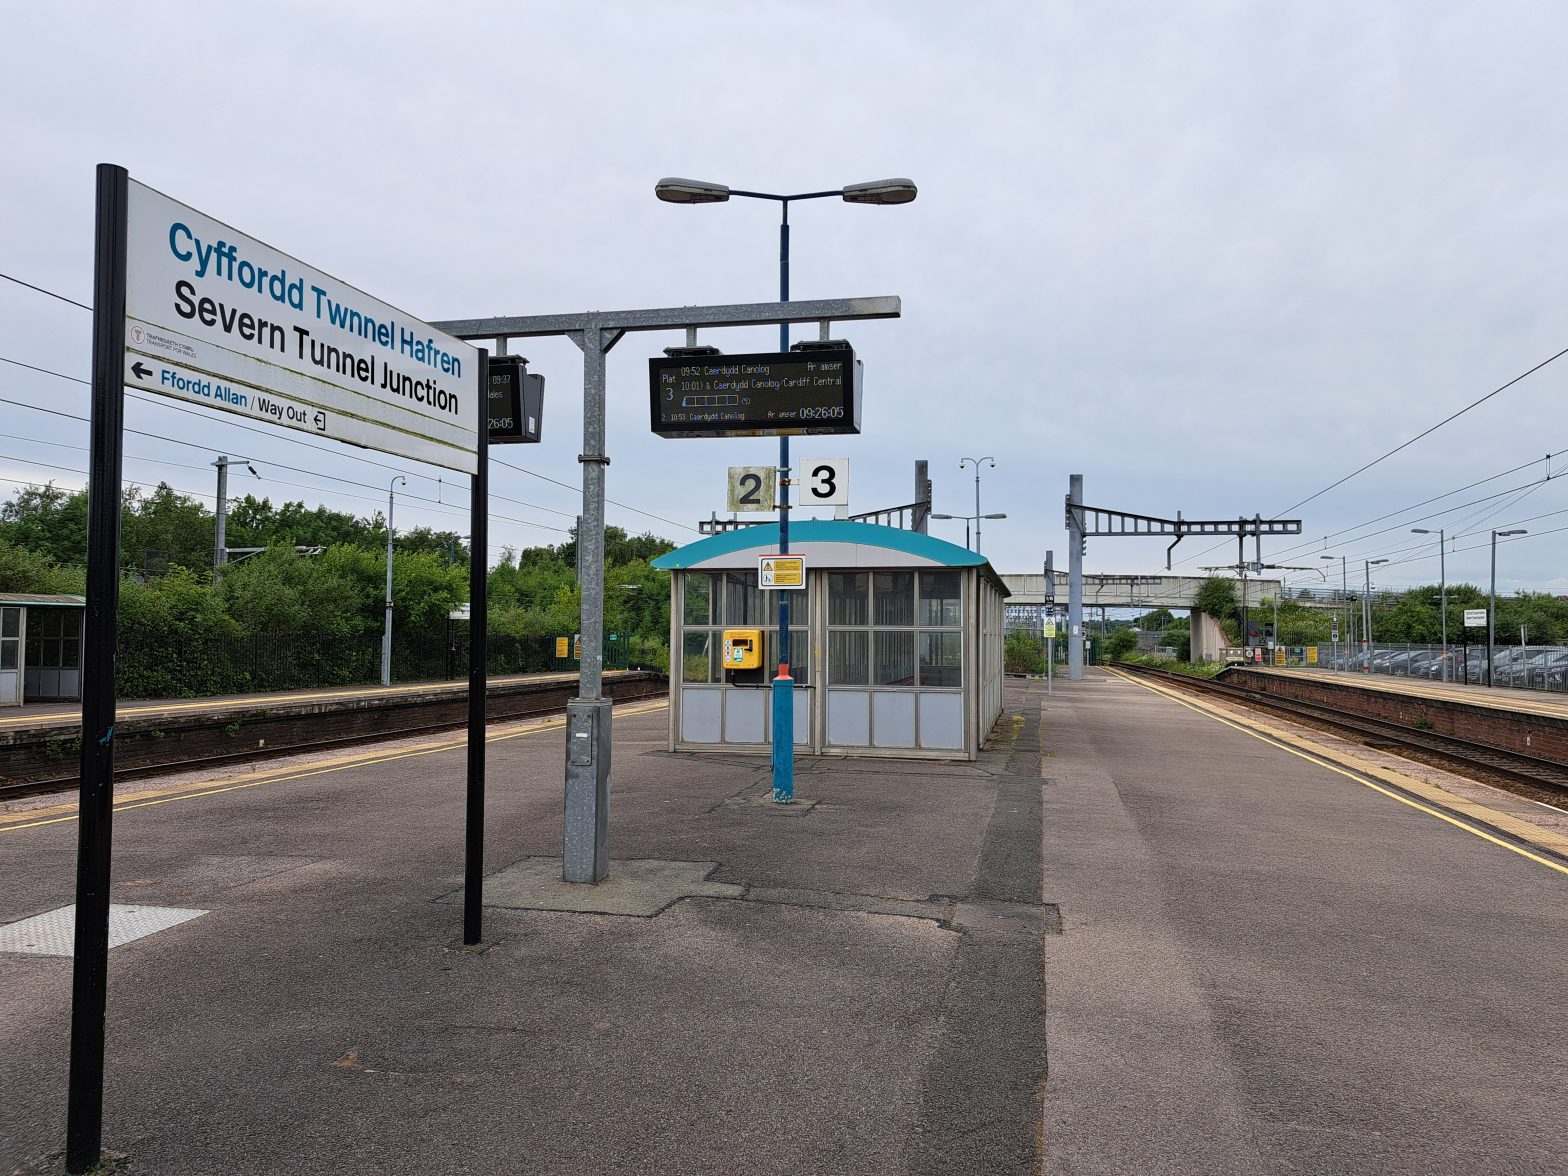 Severn Tunnel Junction station